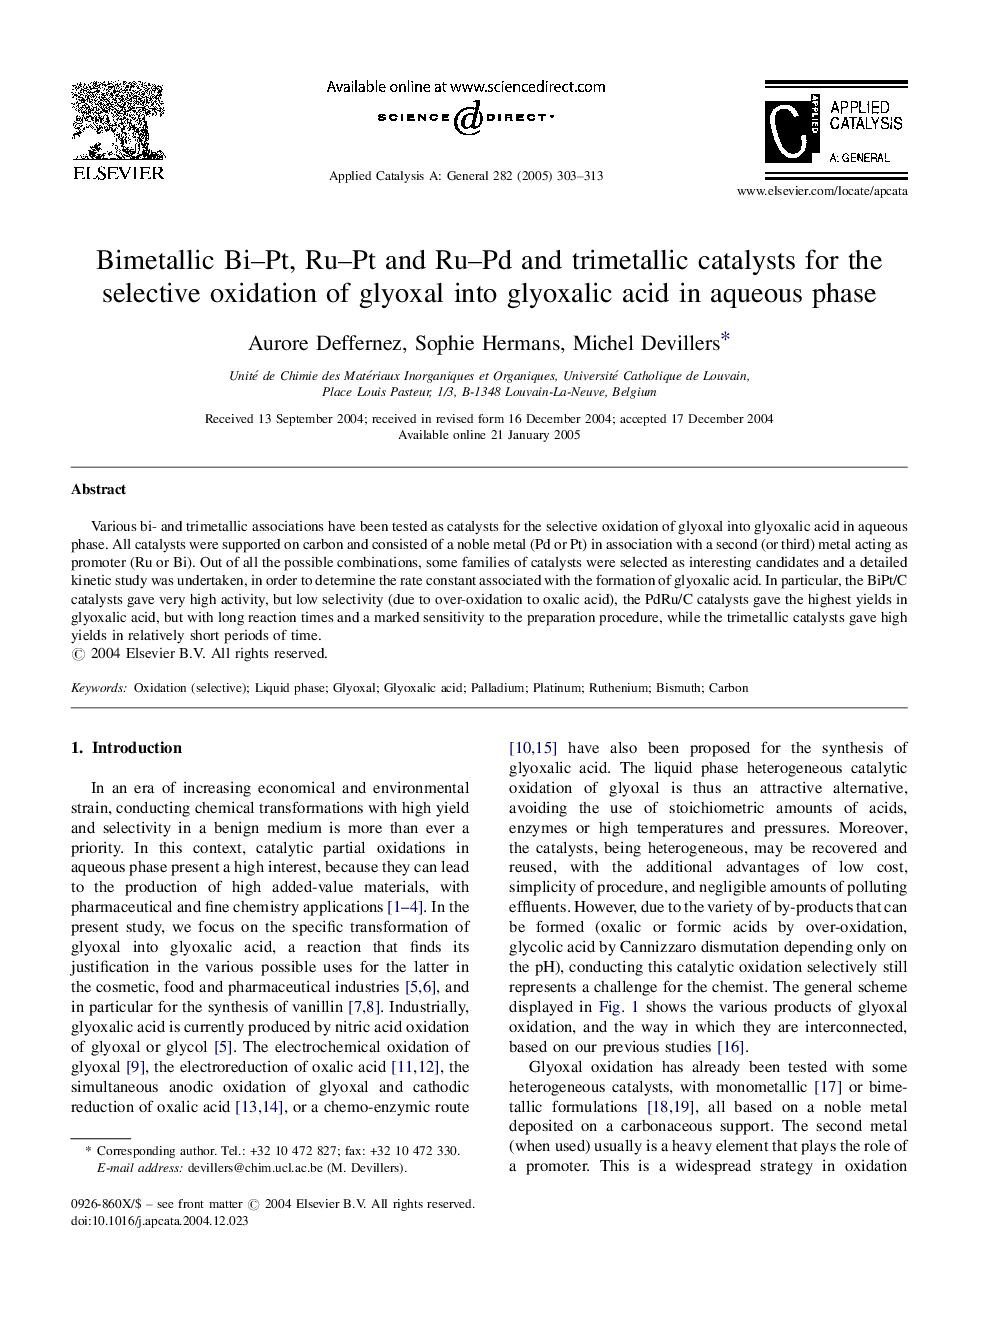 Bimetallic Bi-Pt, Ru-Pt and Ru-Pd and trimetallic catalysts for the selective oxidation of glyoxal into glyoxalic acid in aqueous phase